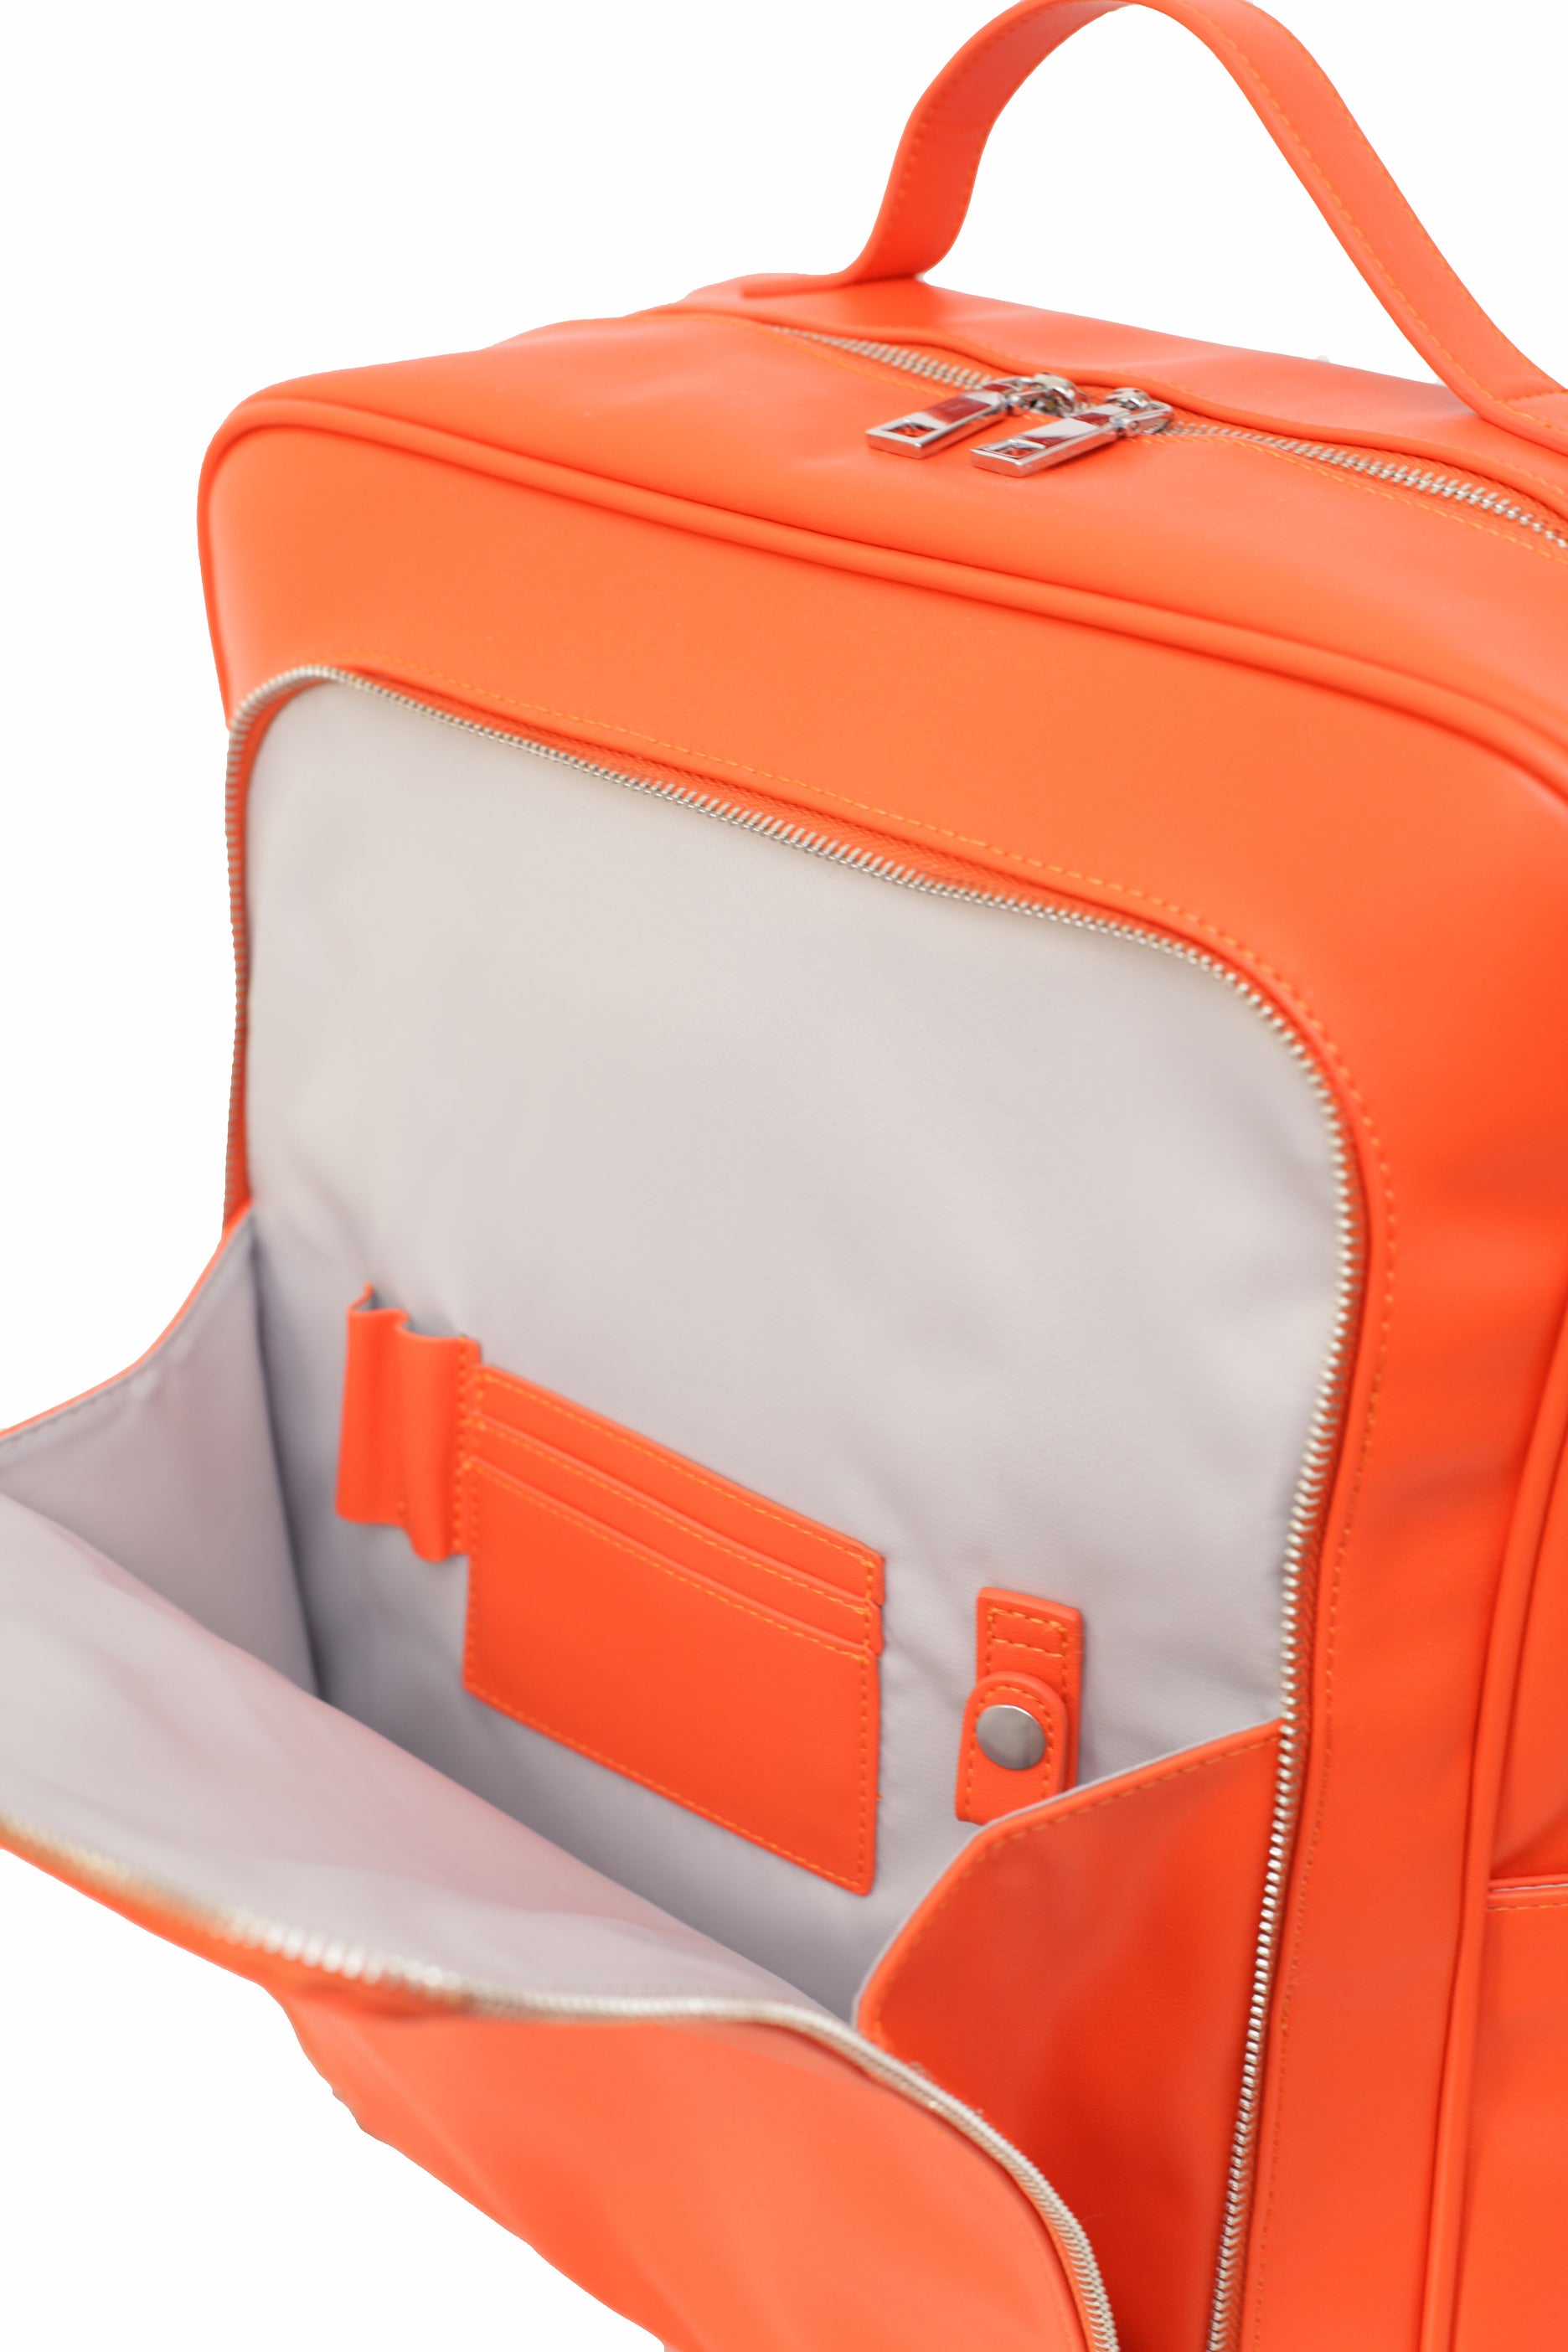 A.G. SPALDING & BROS. 520 FIFTH AVENUE New York Backpack Orange - ShopStyle